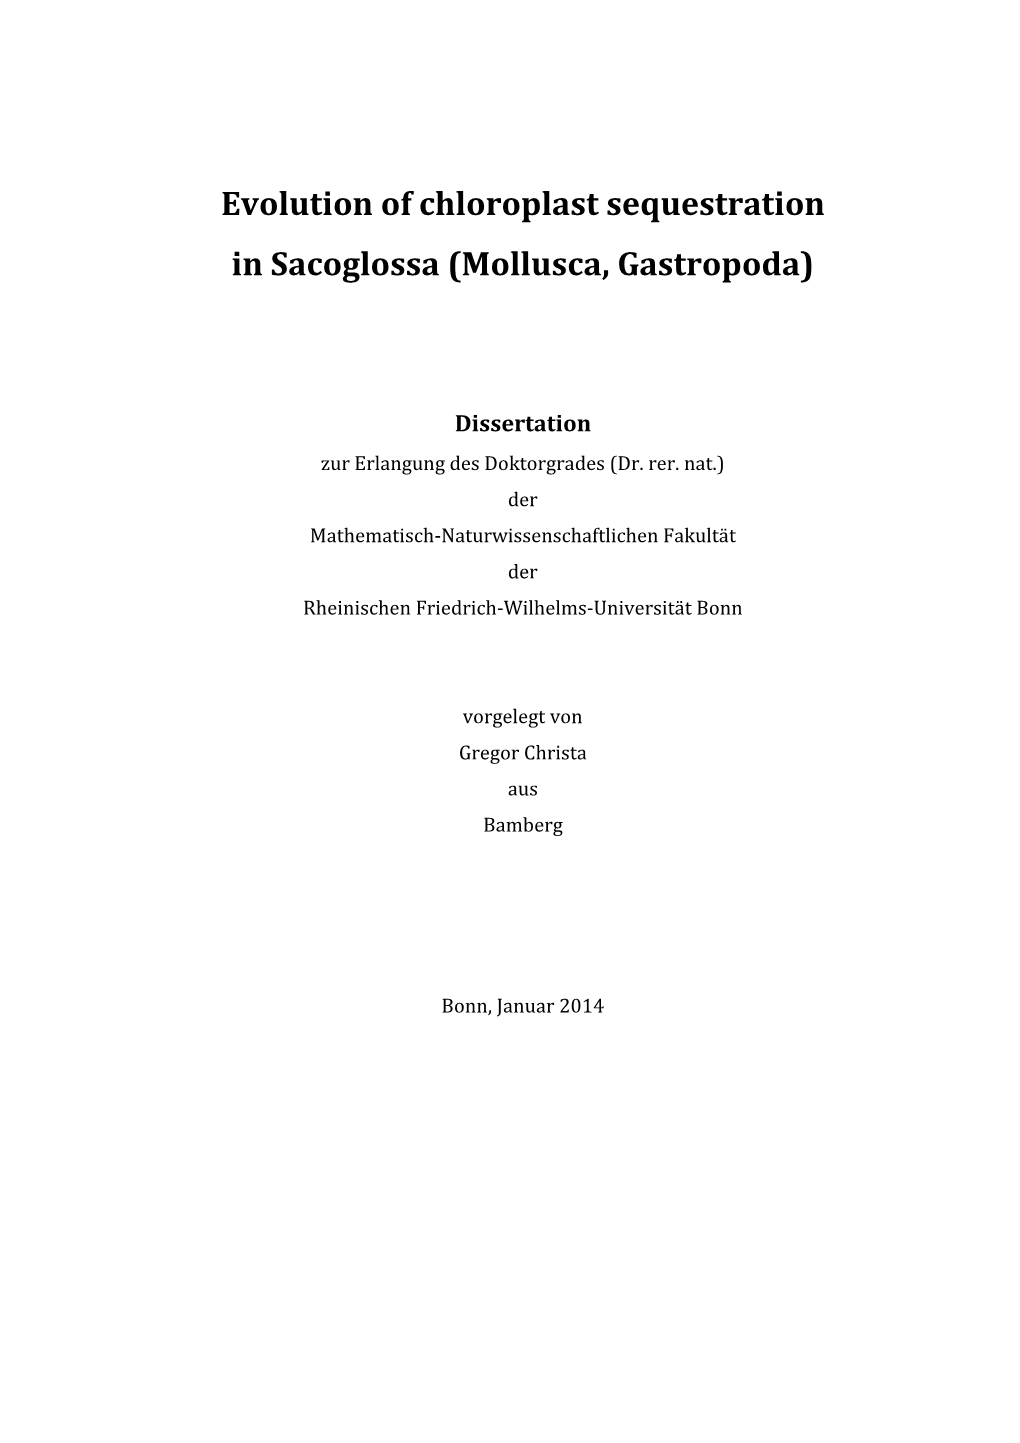 Evolution of Chloroplast Sequestration in Sacoglossa (Mollusca, Gastropoda)